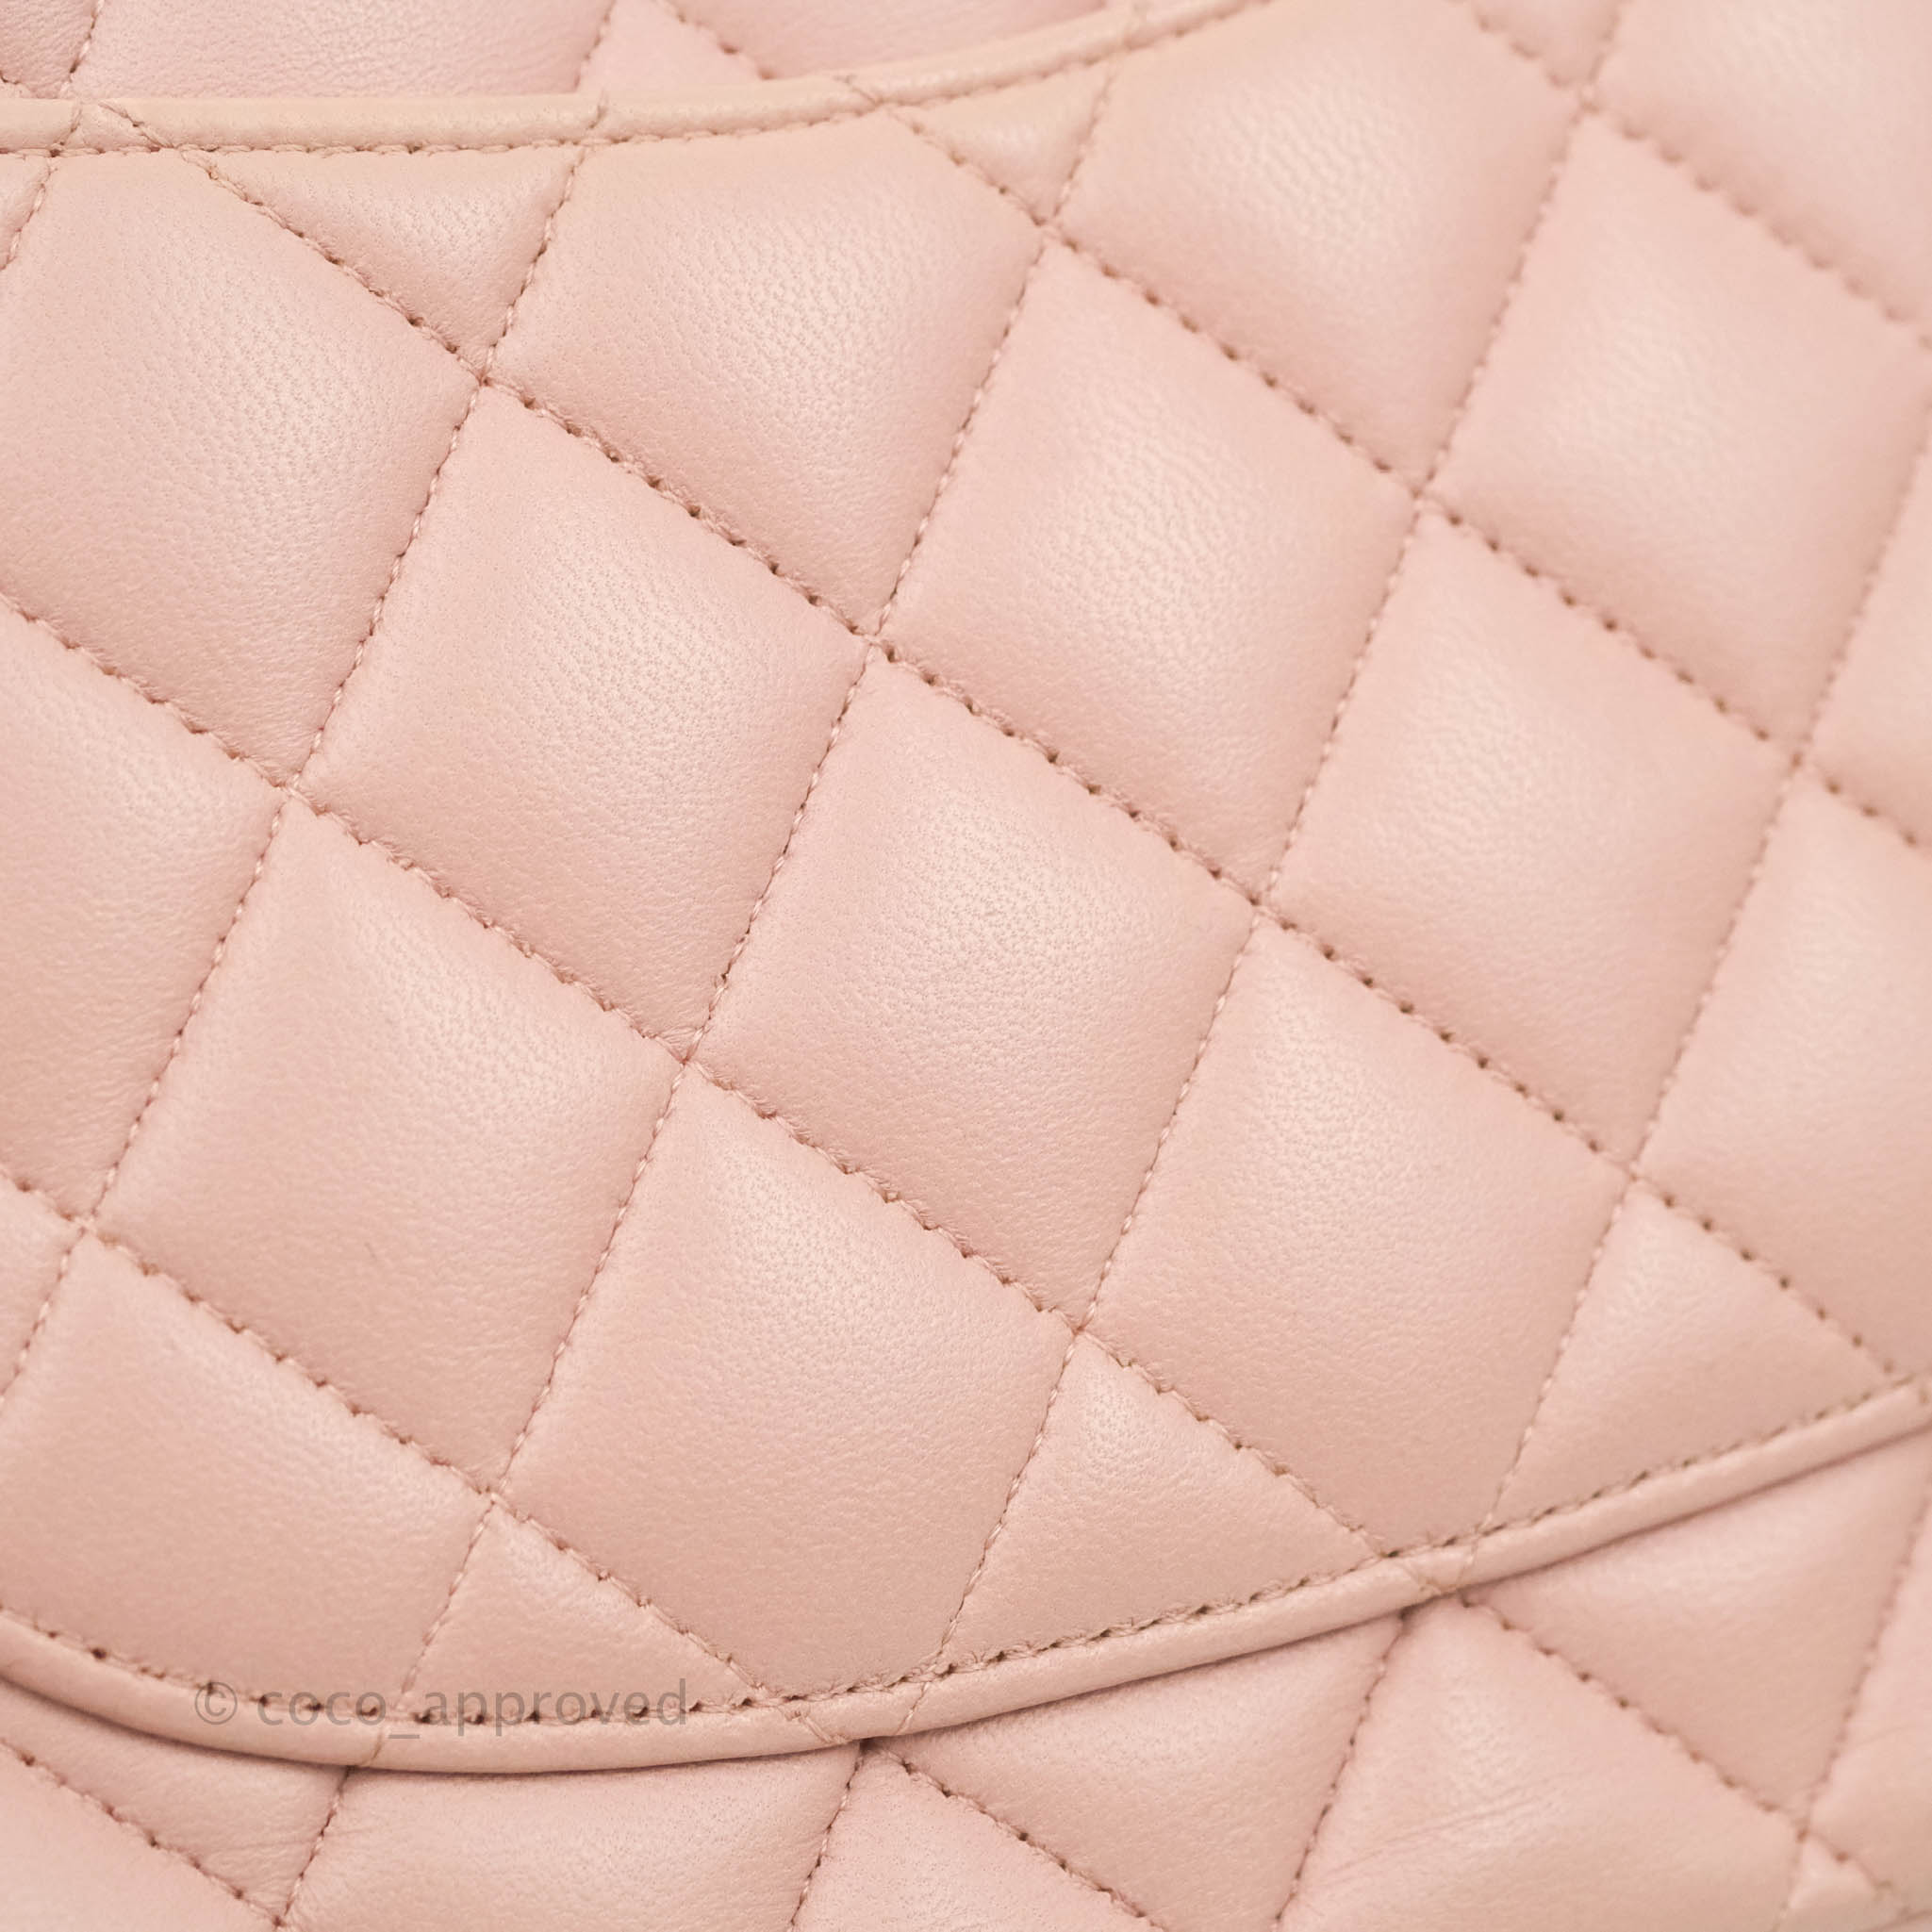 Chanel Pink Bag Lambskin - 97 For Sale on 1stDibs  pink lambskin chanel bag,  chanel mini flap bag lambskin, chanel pink lambskin bag